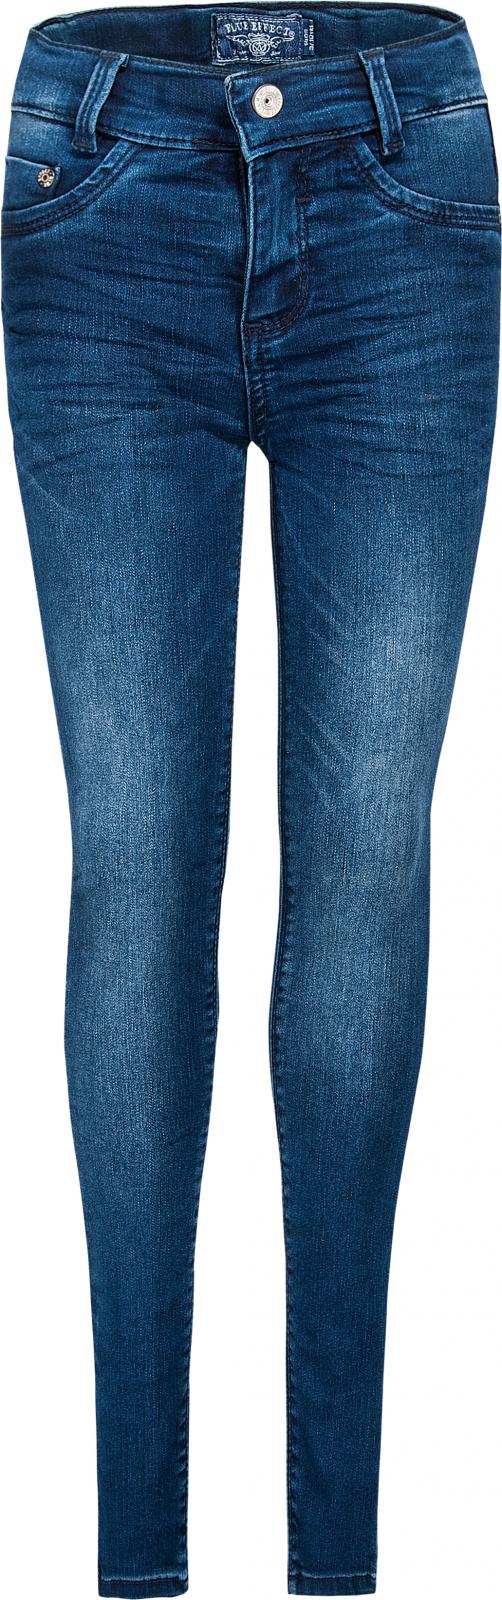 Mädchen 1171-0126 Jeans Medium Blue